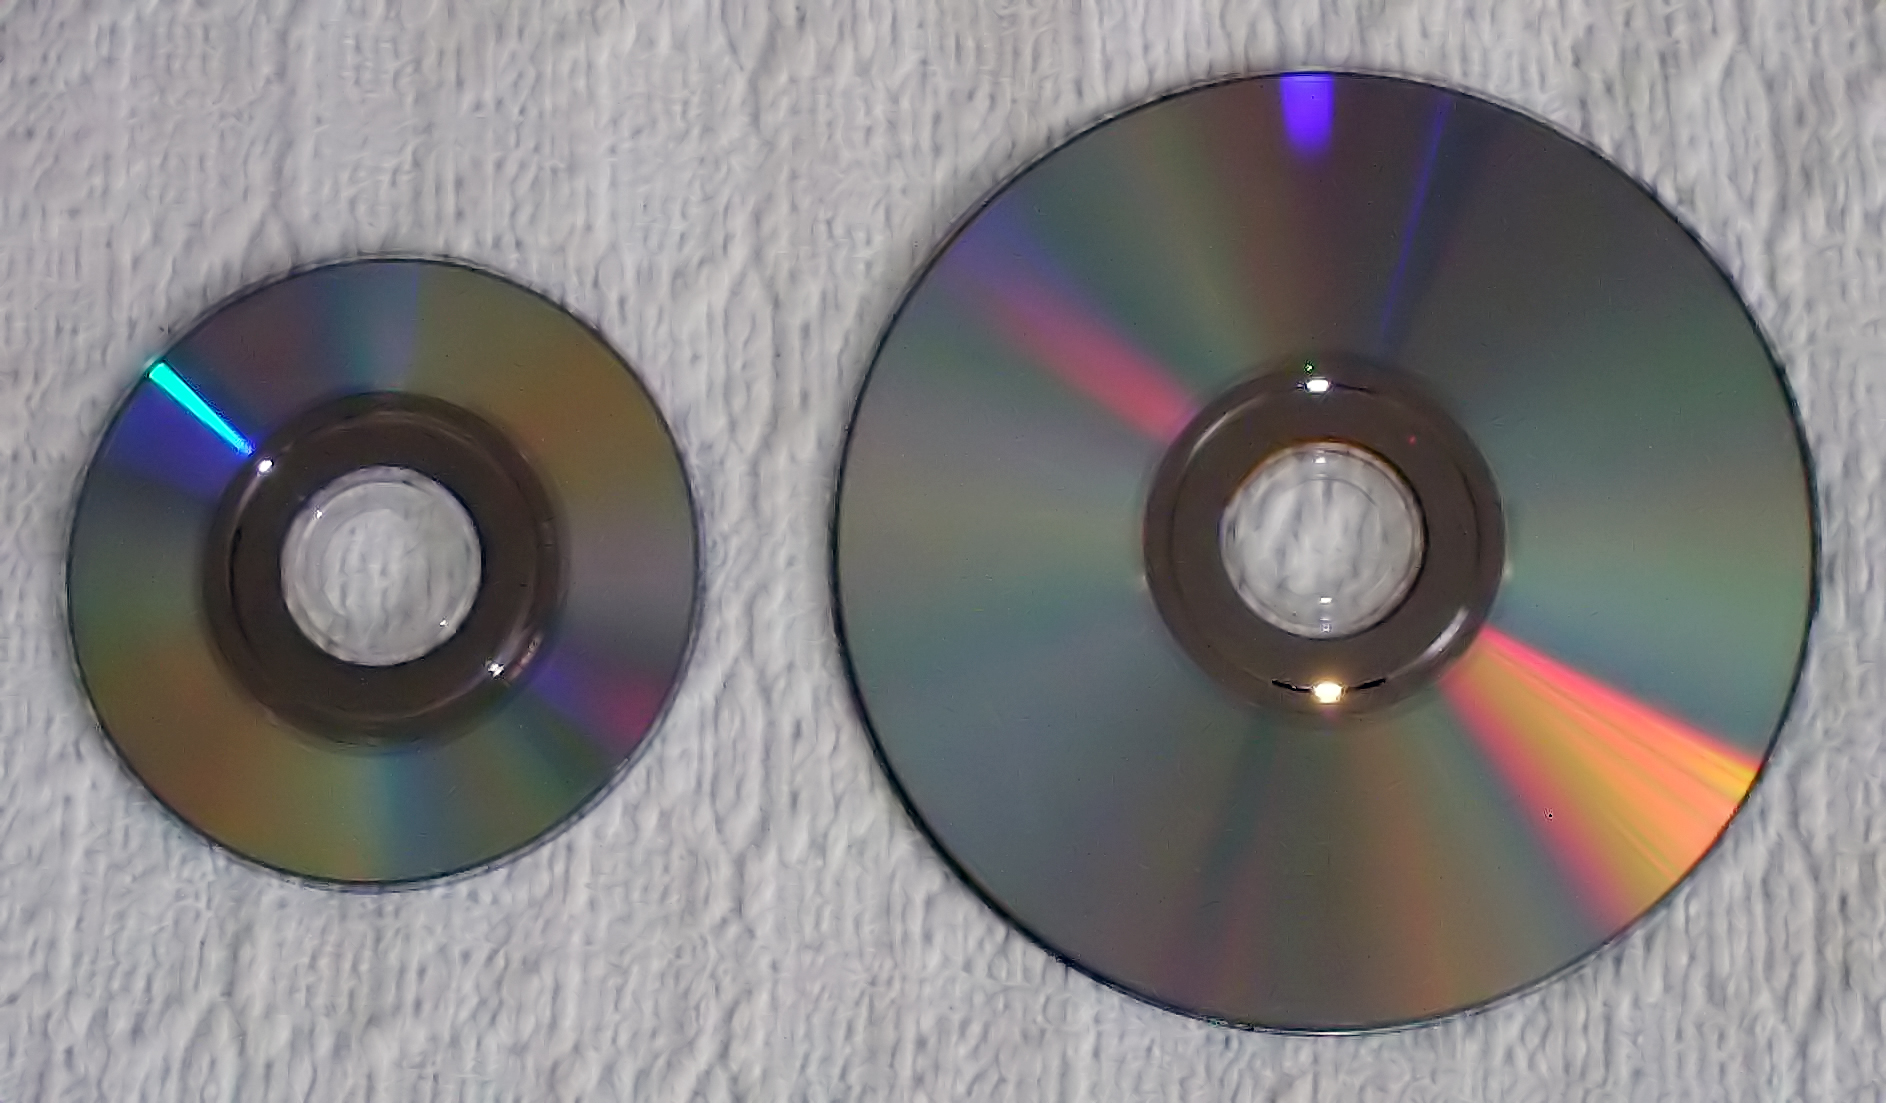 Nintendo_GameCube_Game_Disc_and_Wii_Optical_Disc.jpg